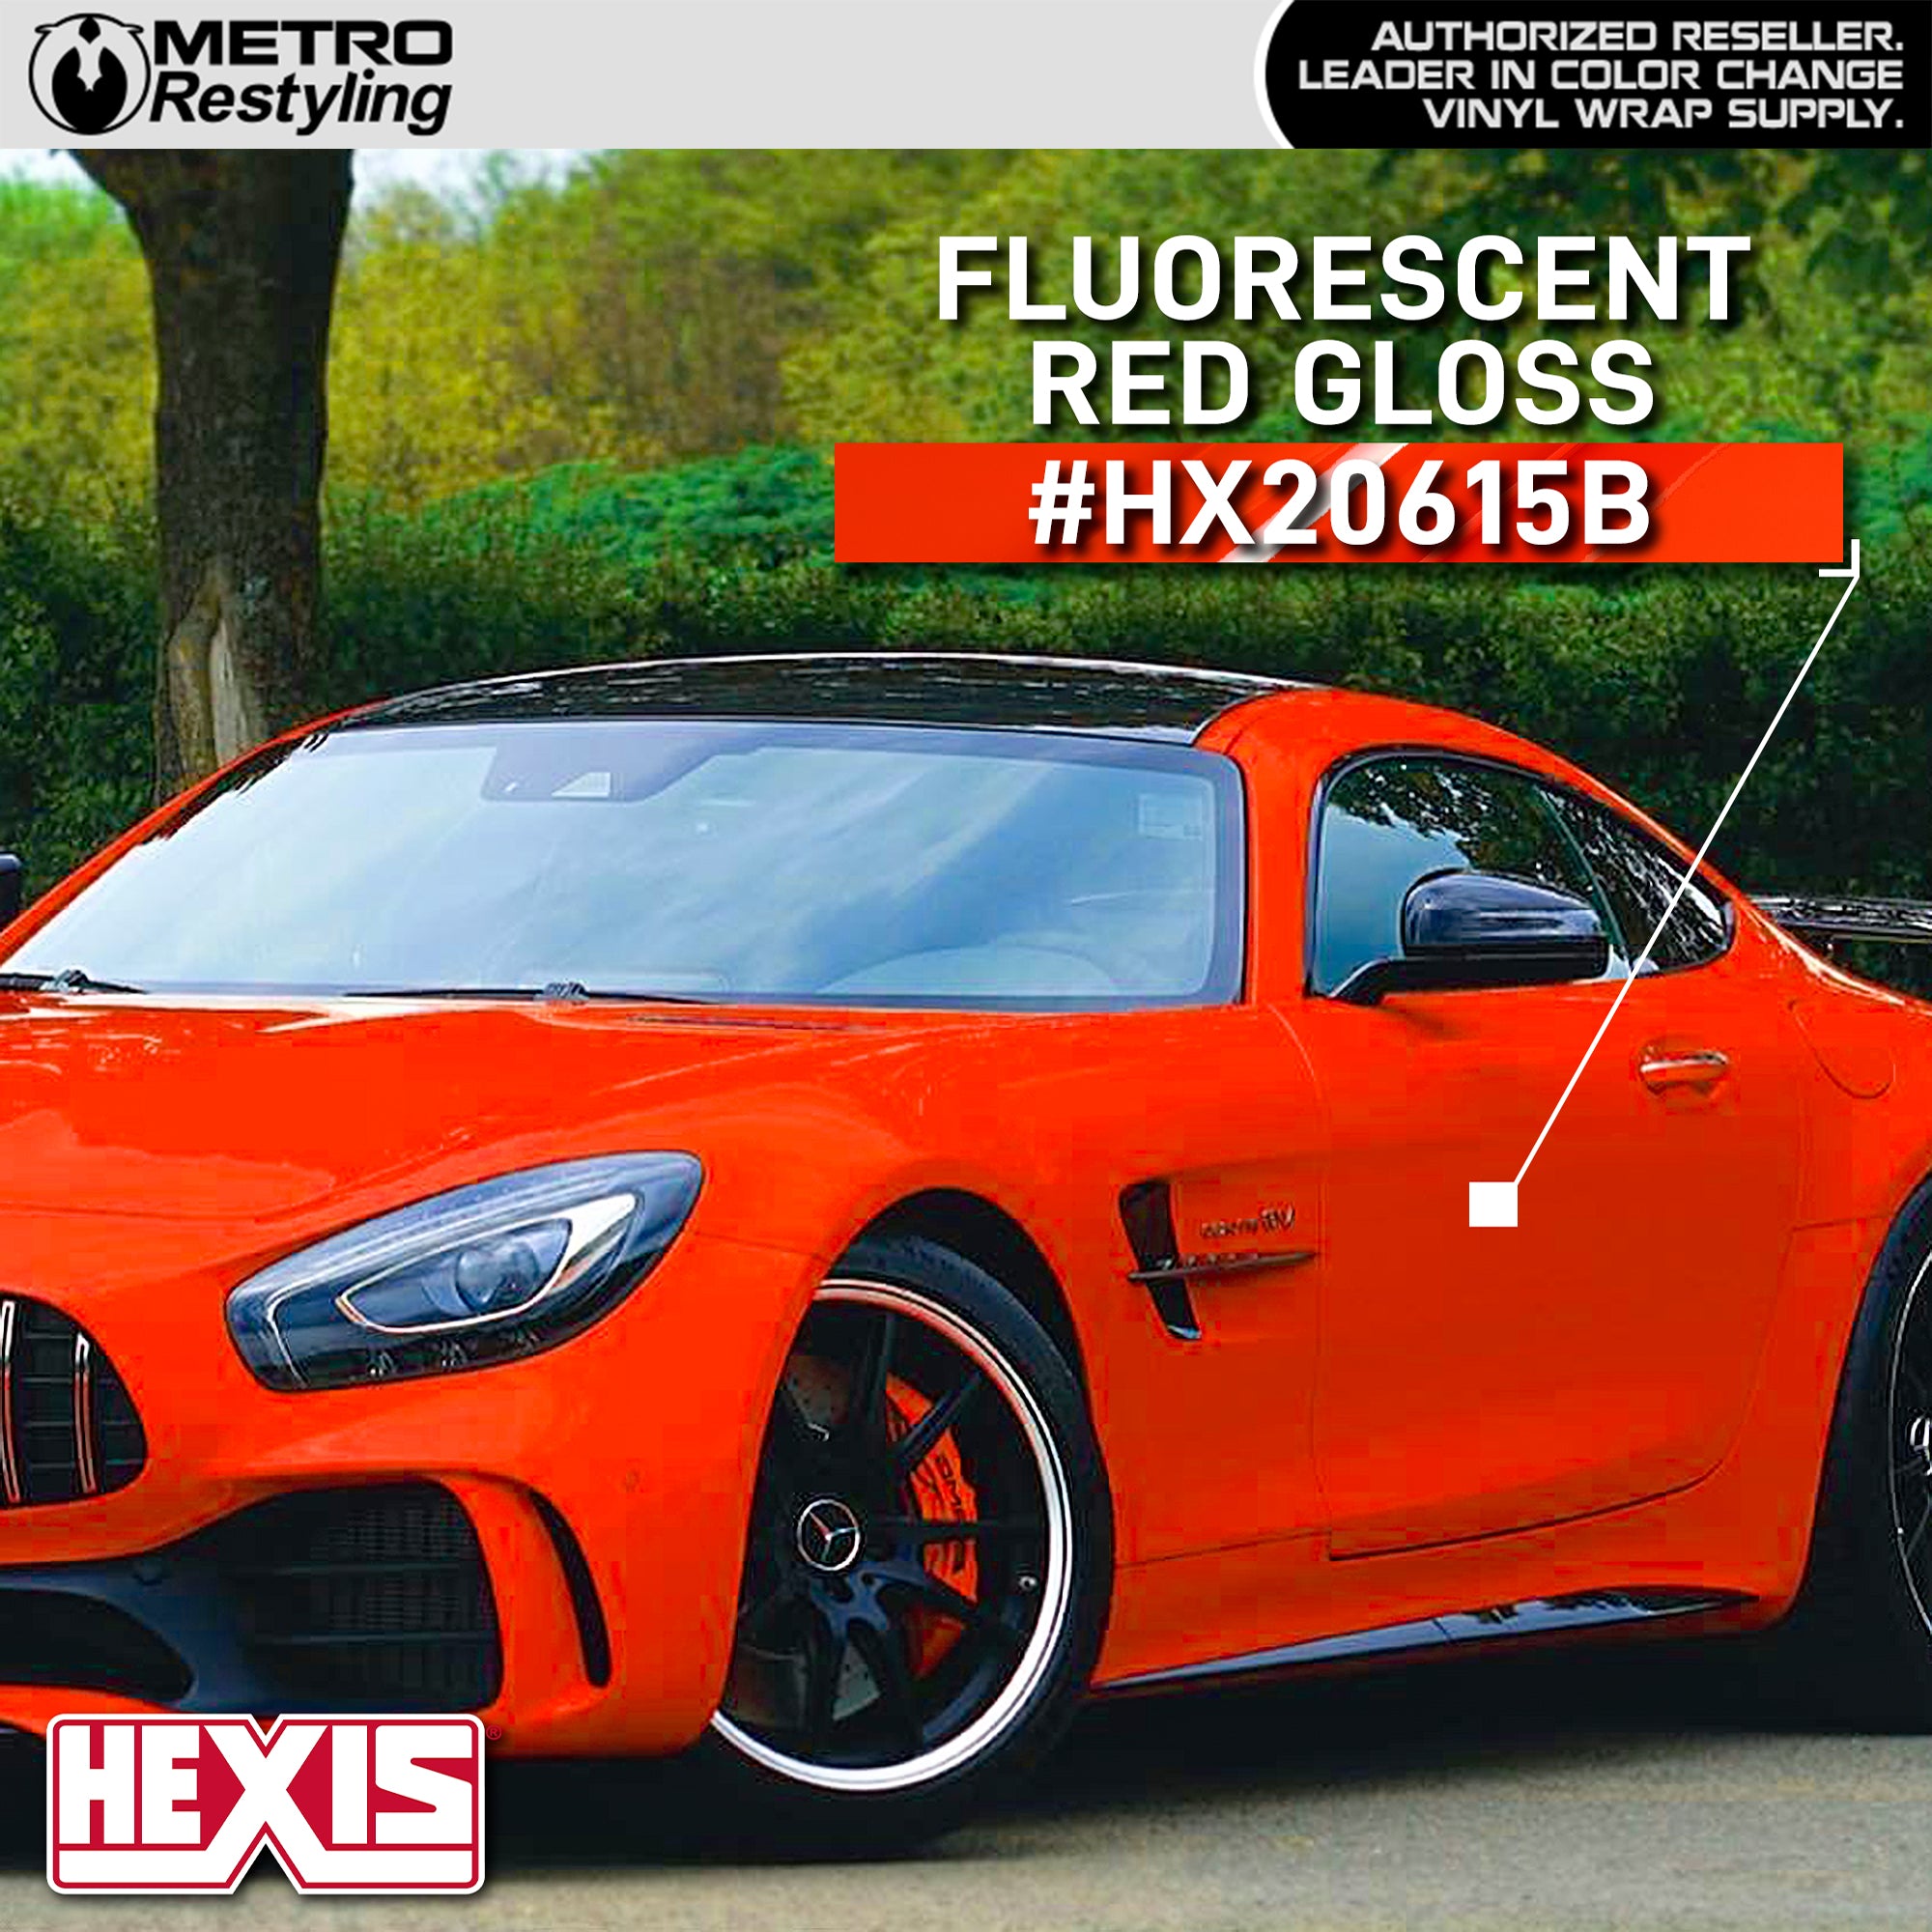 Hexis Gloss Fluorescent Red Vinyl Wrap | HX20615B